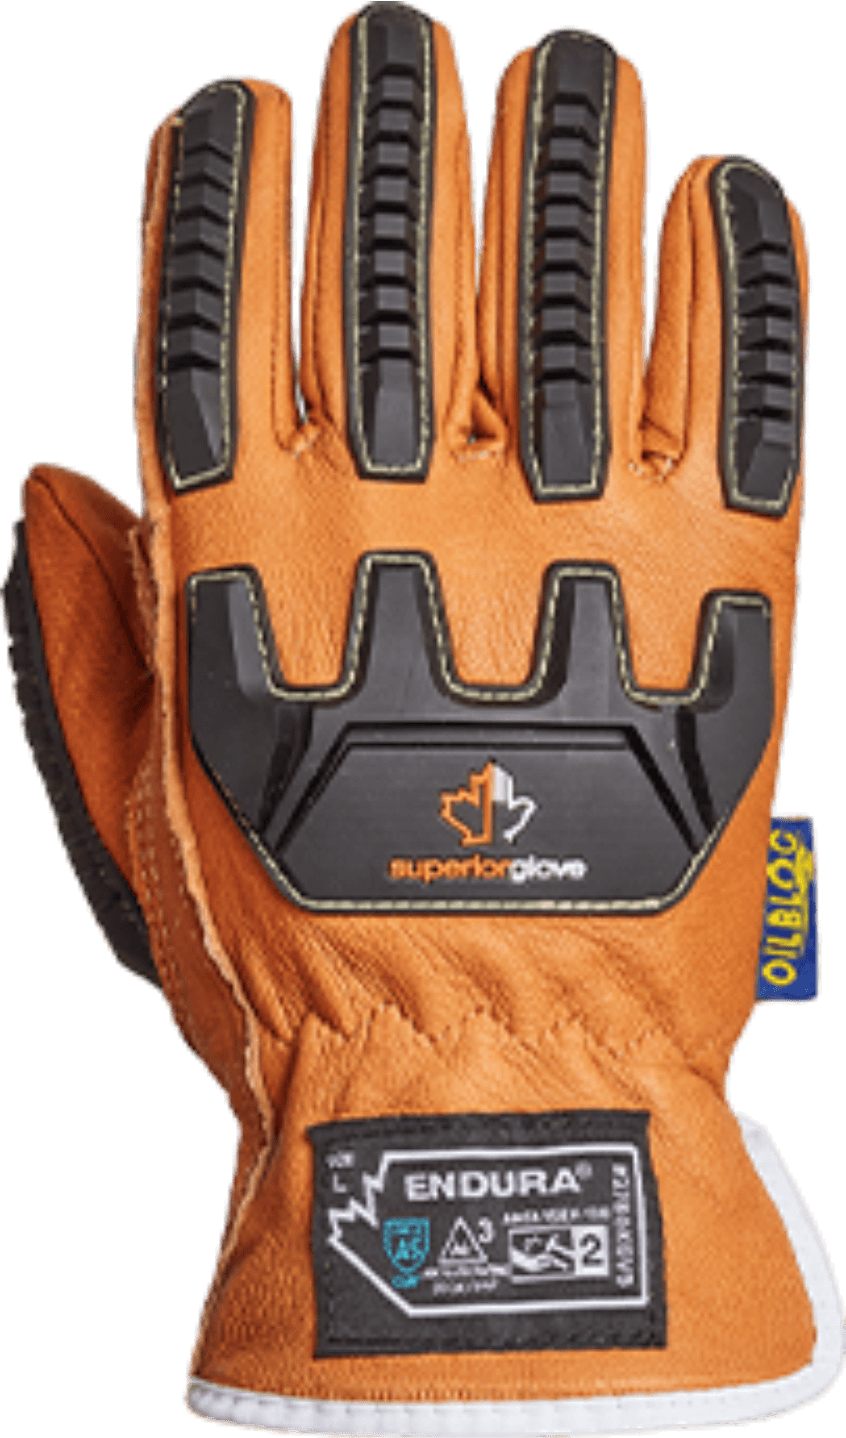 safety gloves types